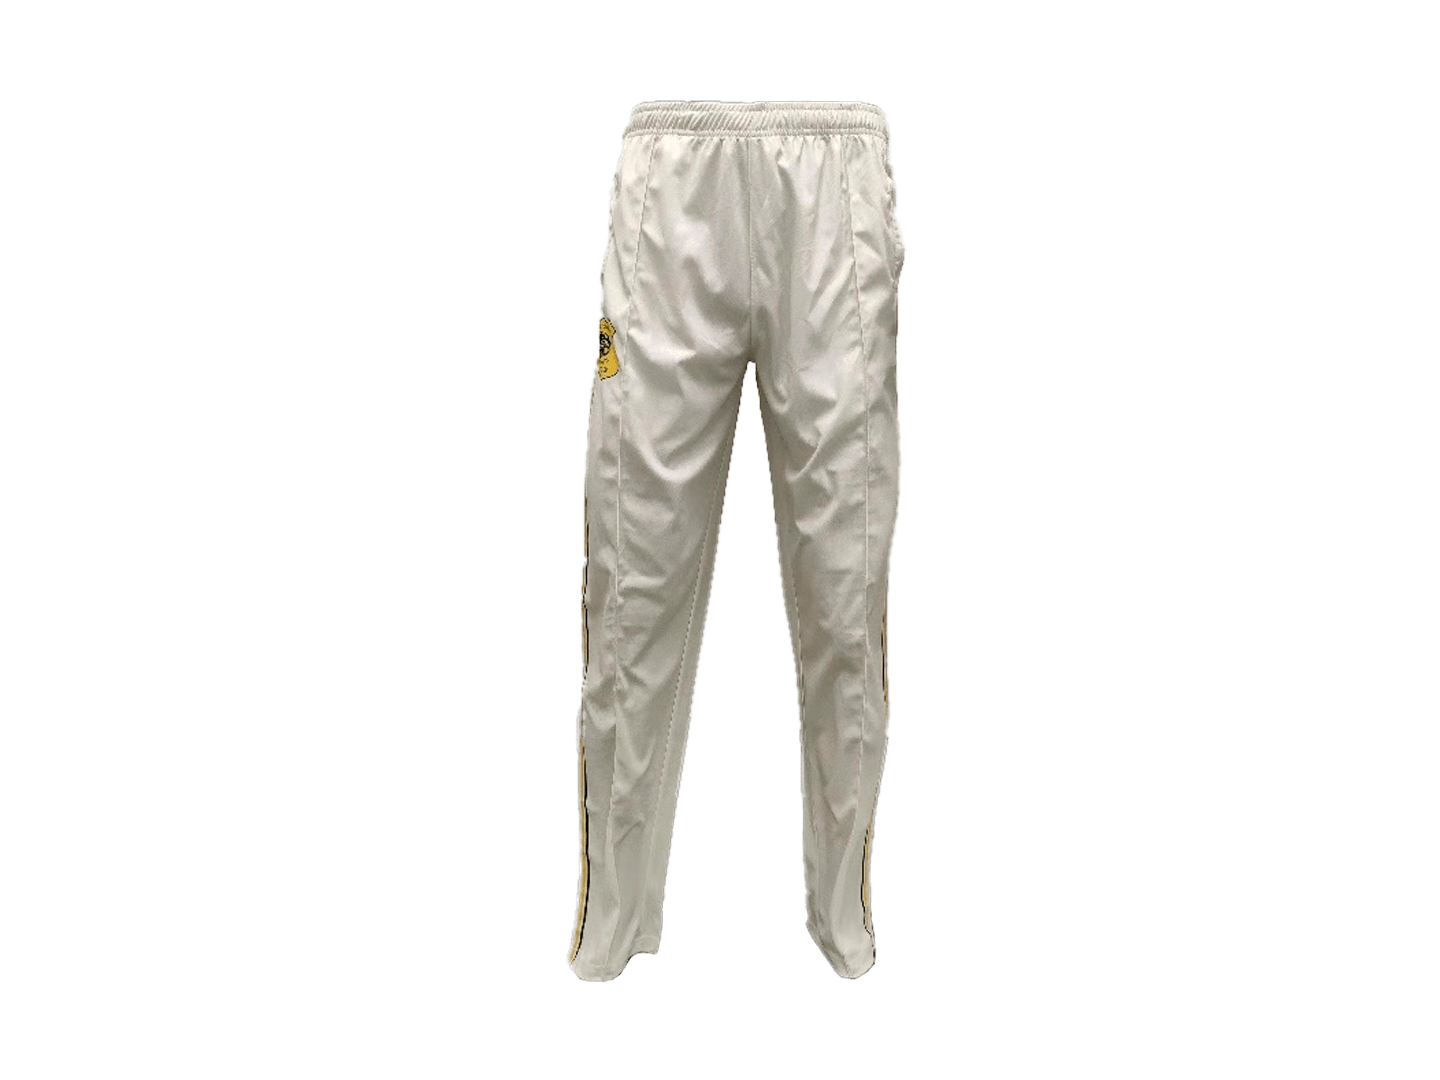 Custom Cricket Pants Sports Apparel Manufacturer